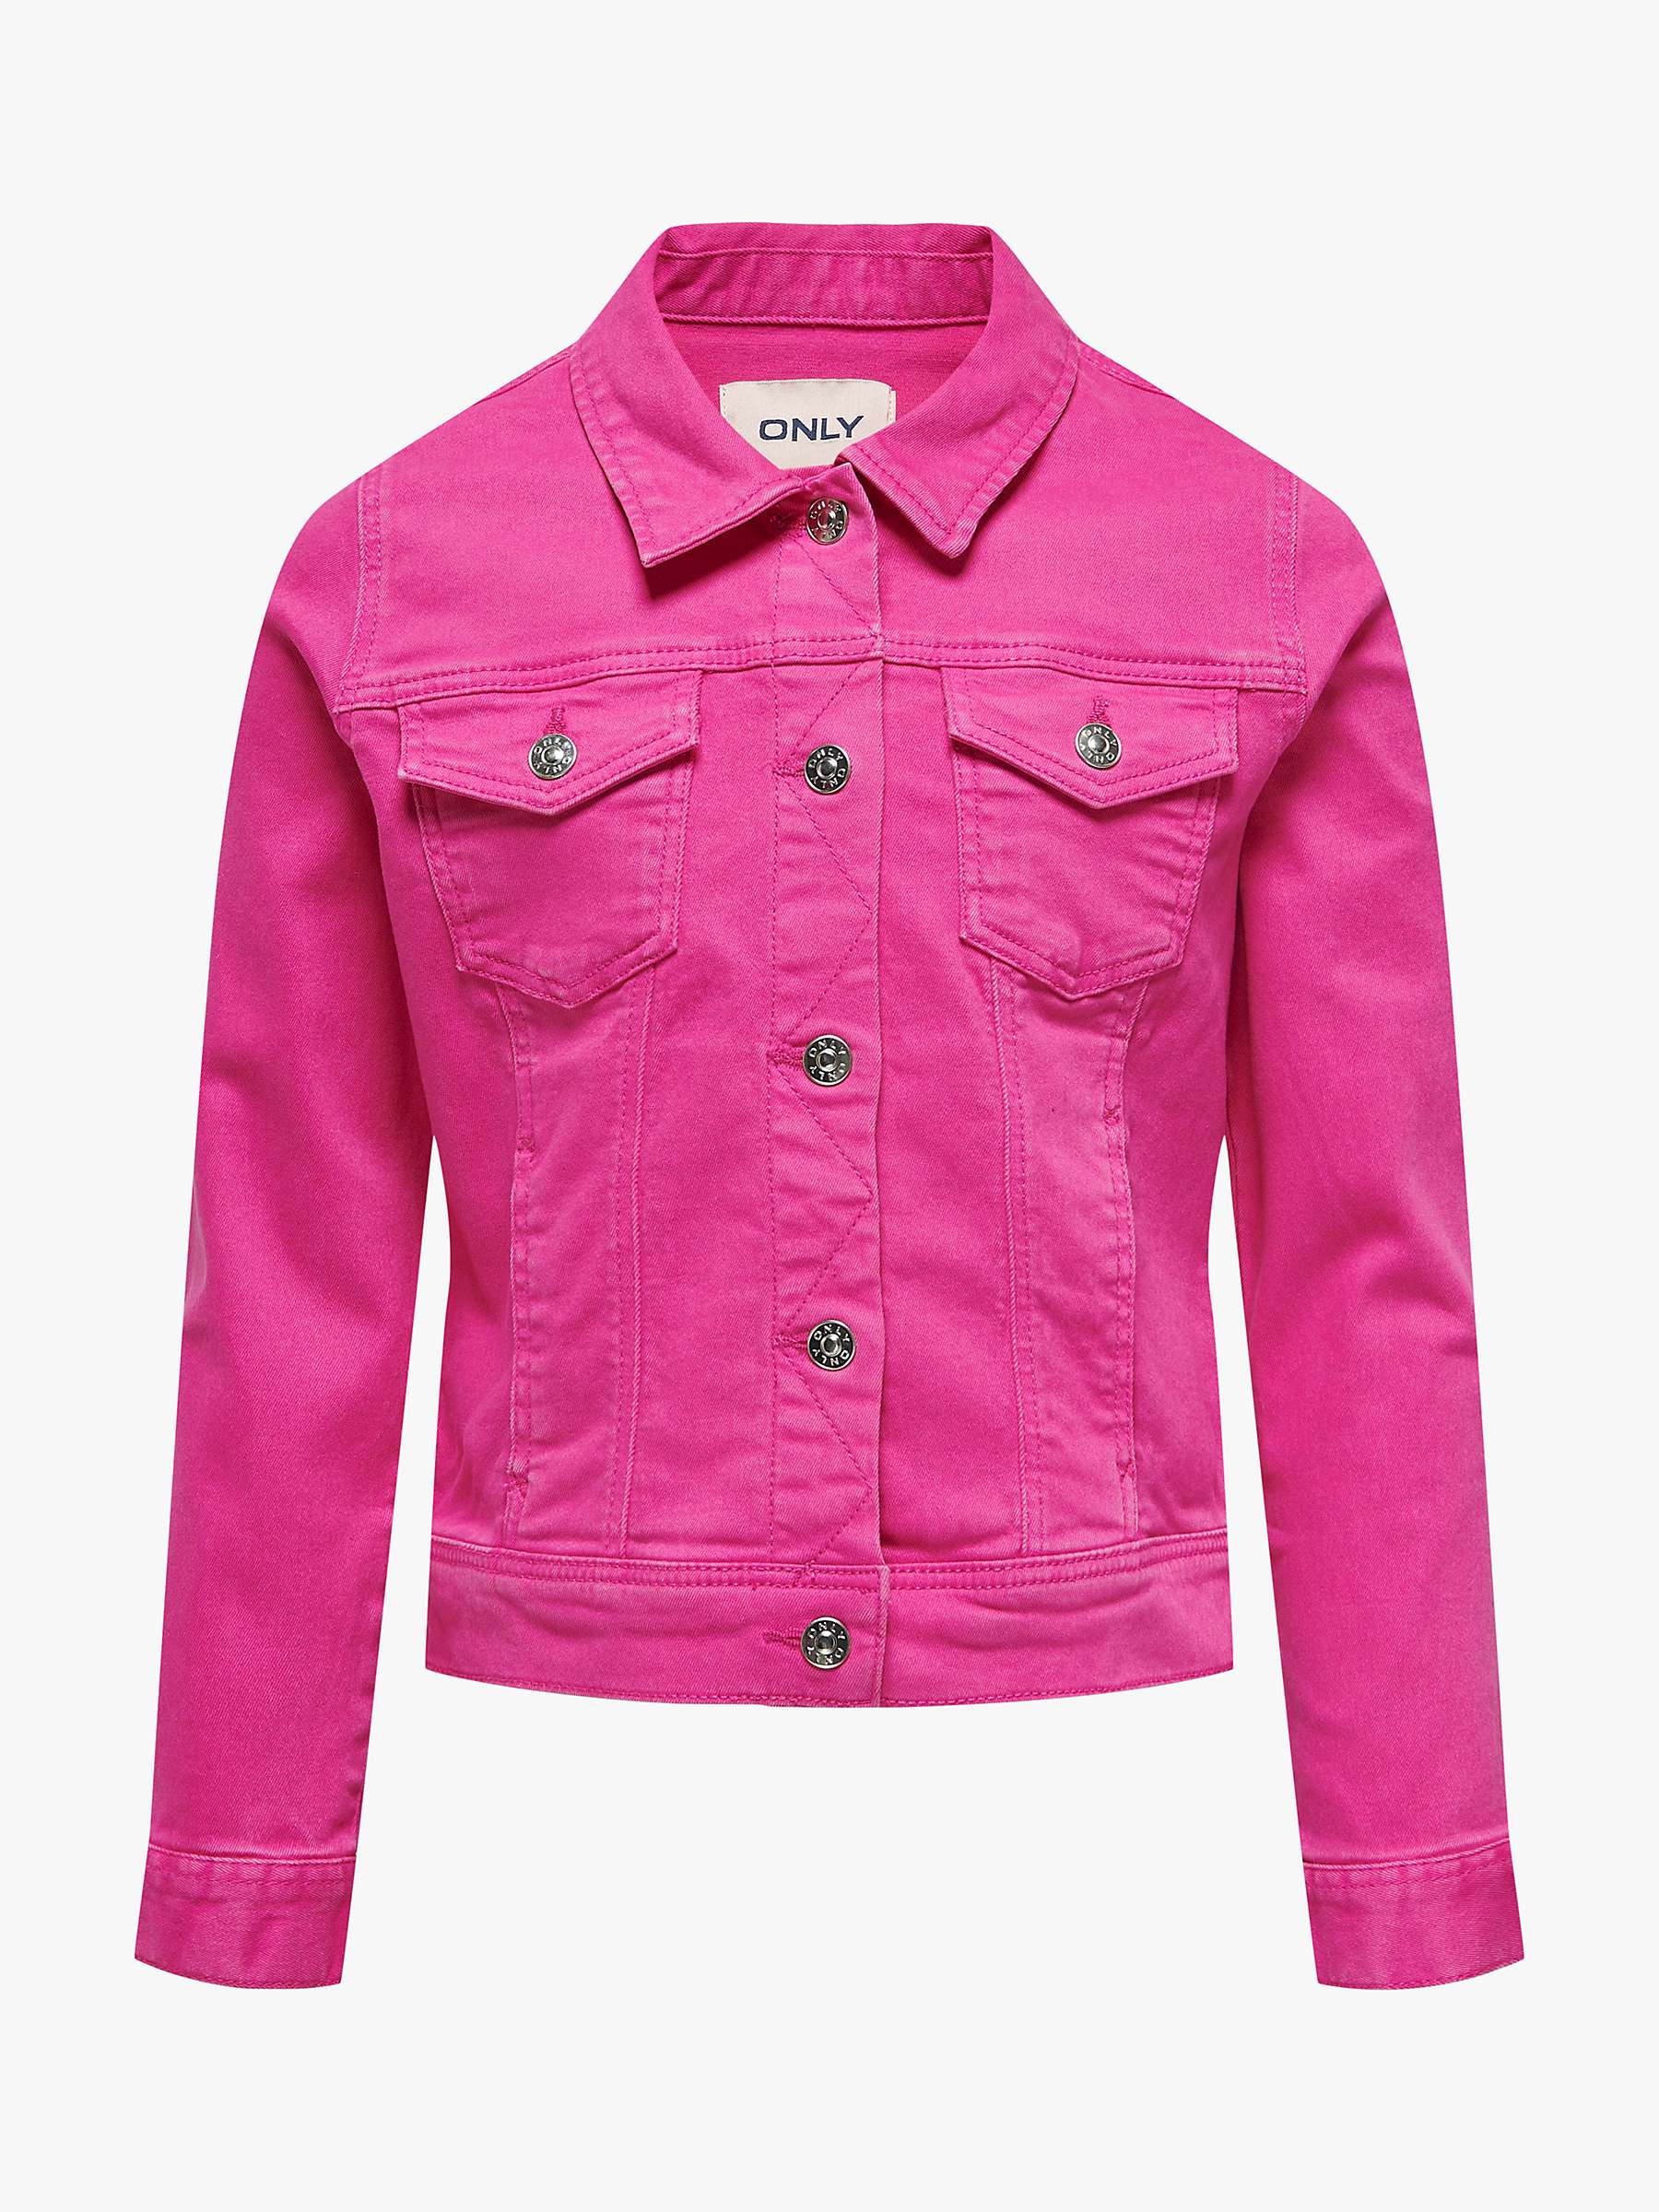 Buy KIDS ONLY Kids' Plain Denim Jacket, Raspberry Rose Online at johnlewis.com